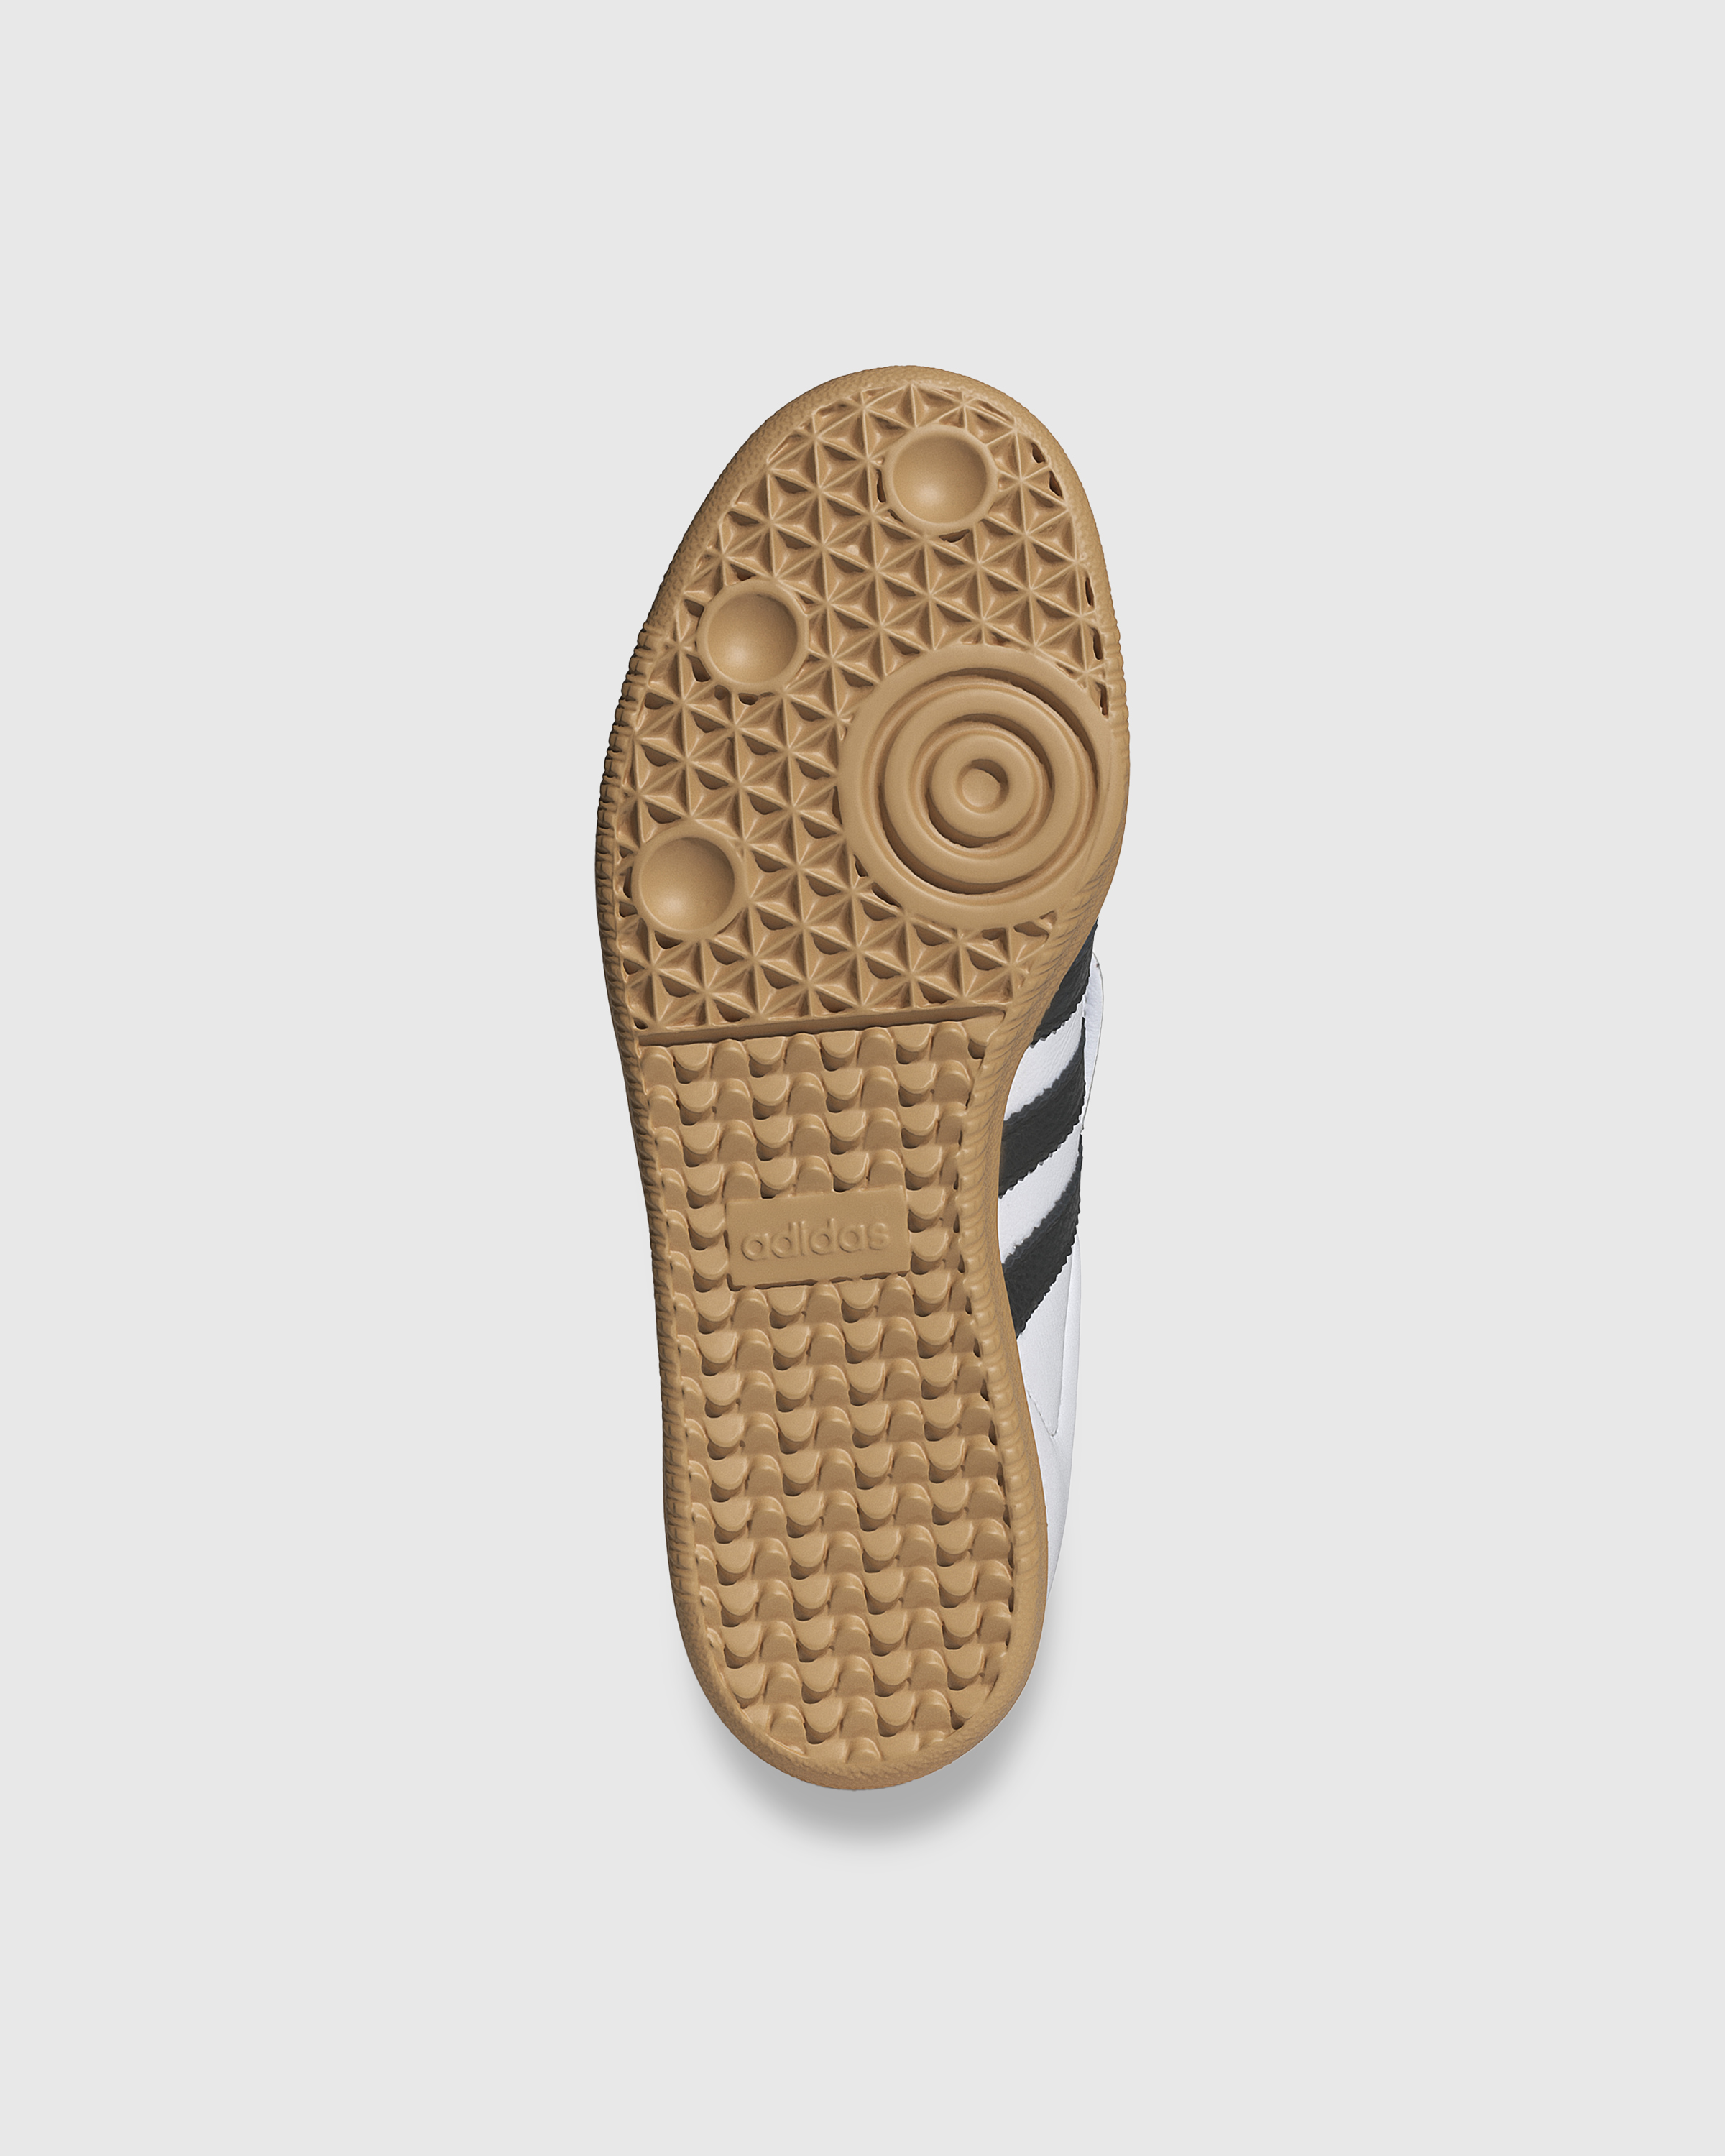 Adidas – Samba LT W White/Black/Gold - Low Top Sneakers - White - Image 6